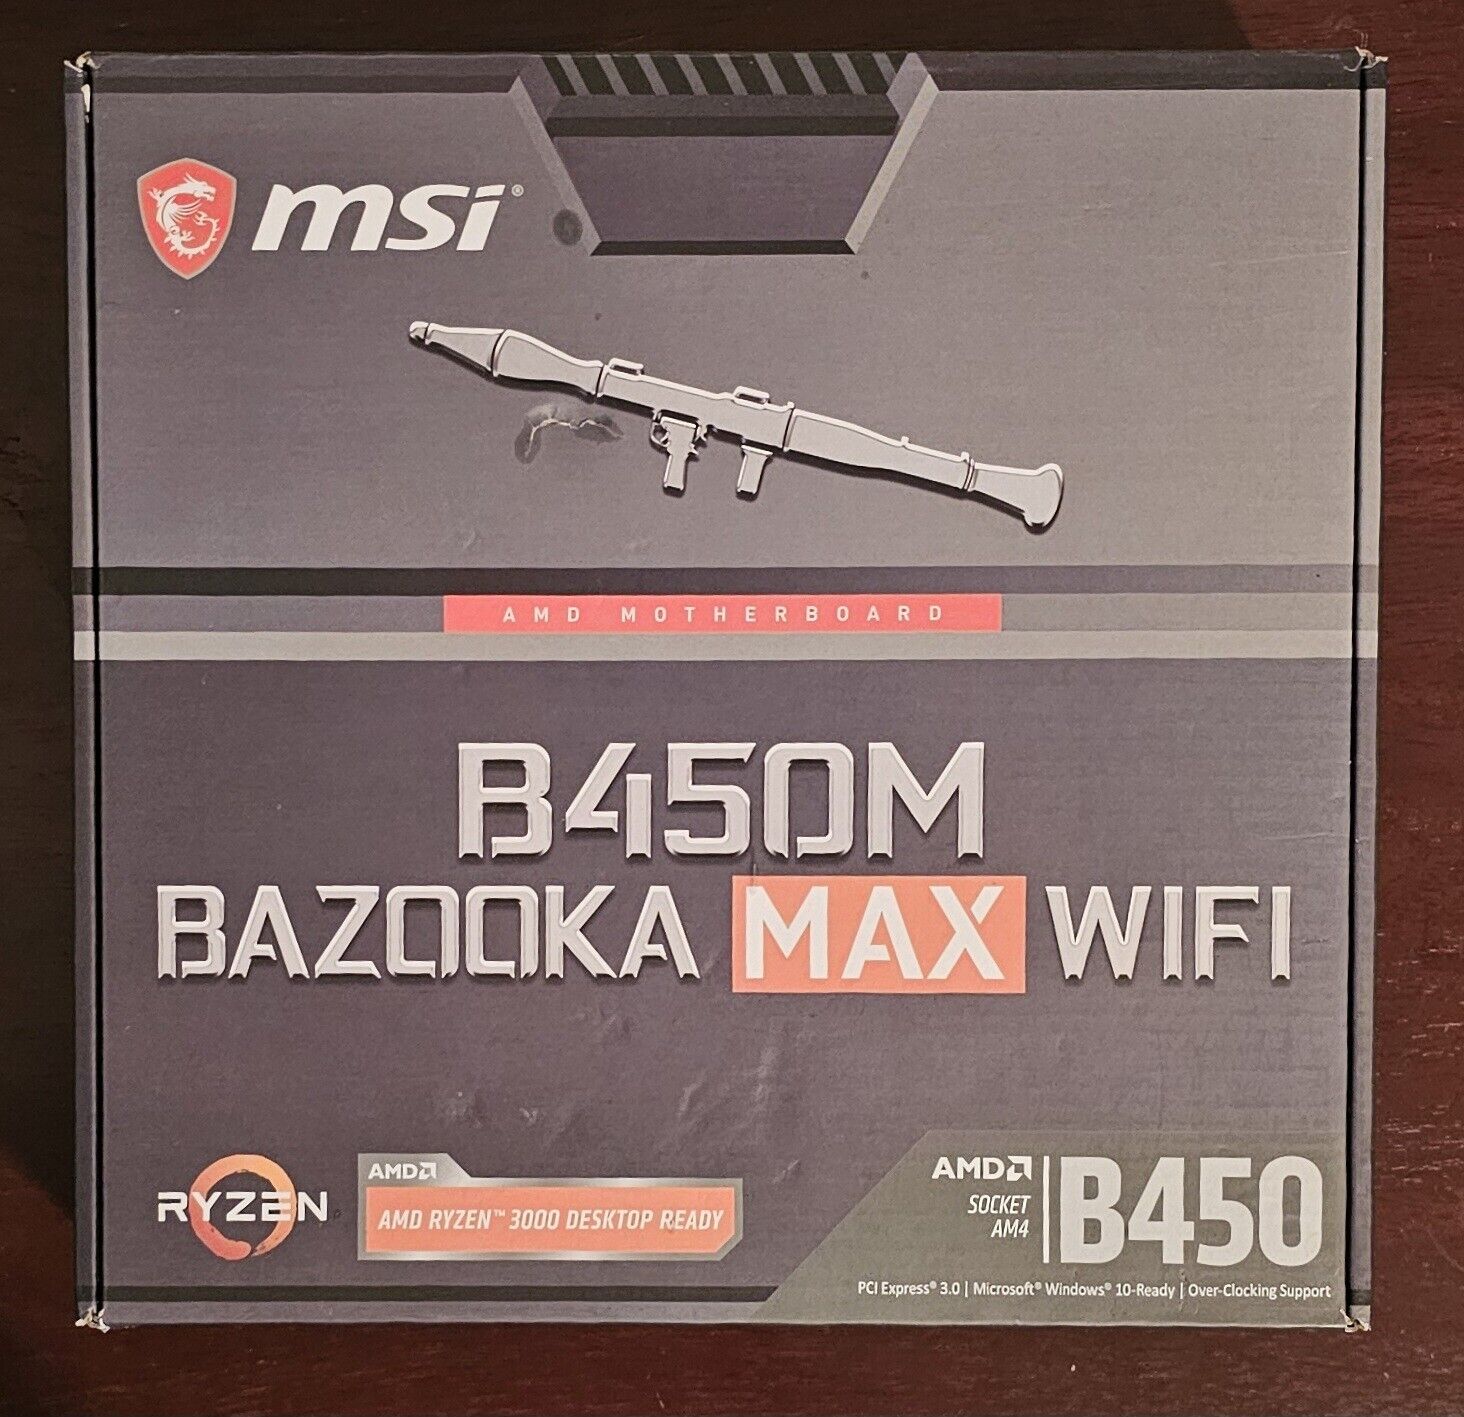 **LATEST BIOS** MSI B450M BAZOOKA MAX WiFi AMD Ryzen AM4 MicroATX Motherboard